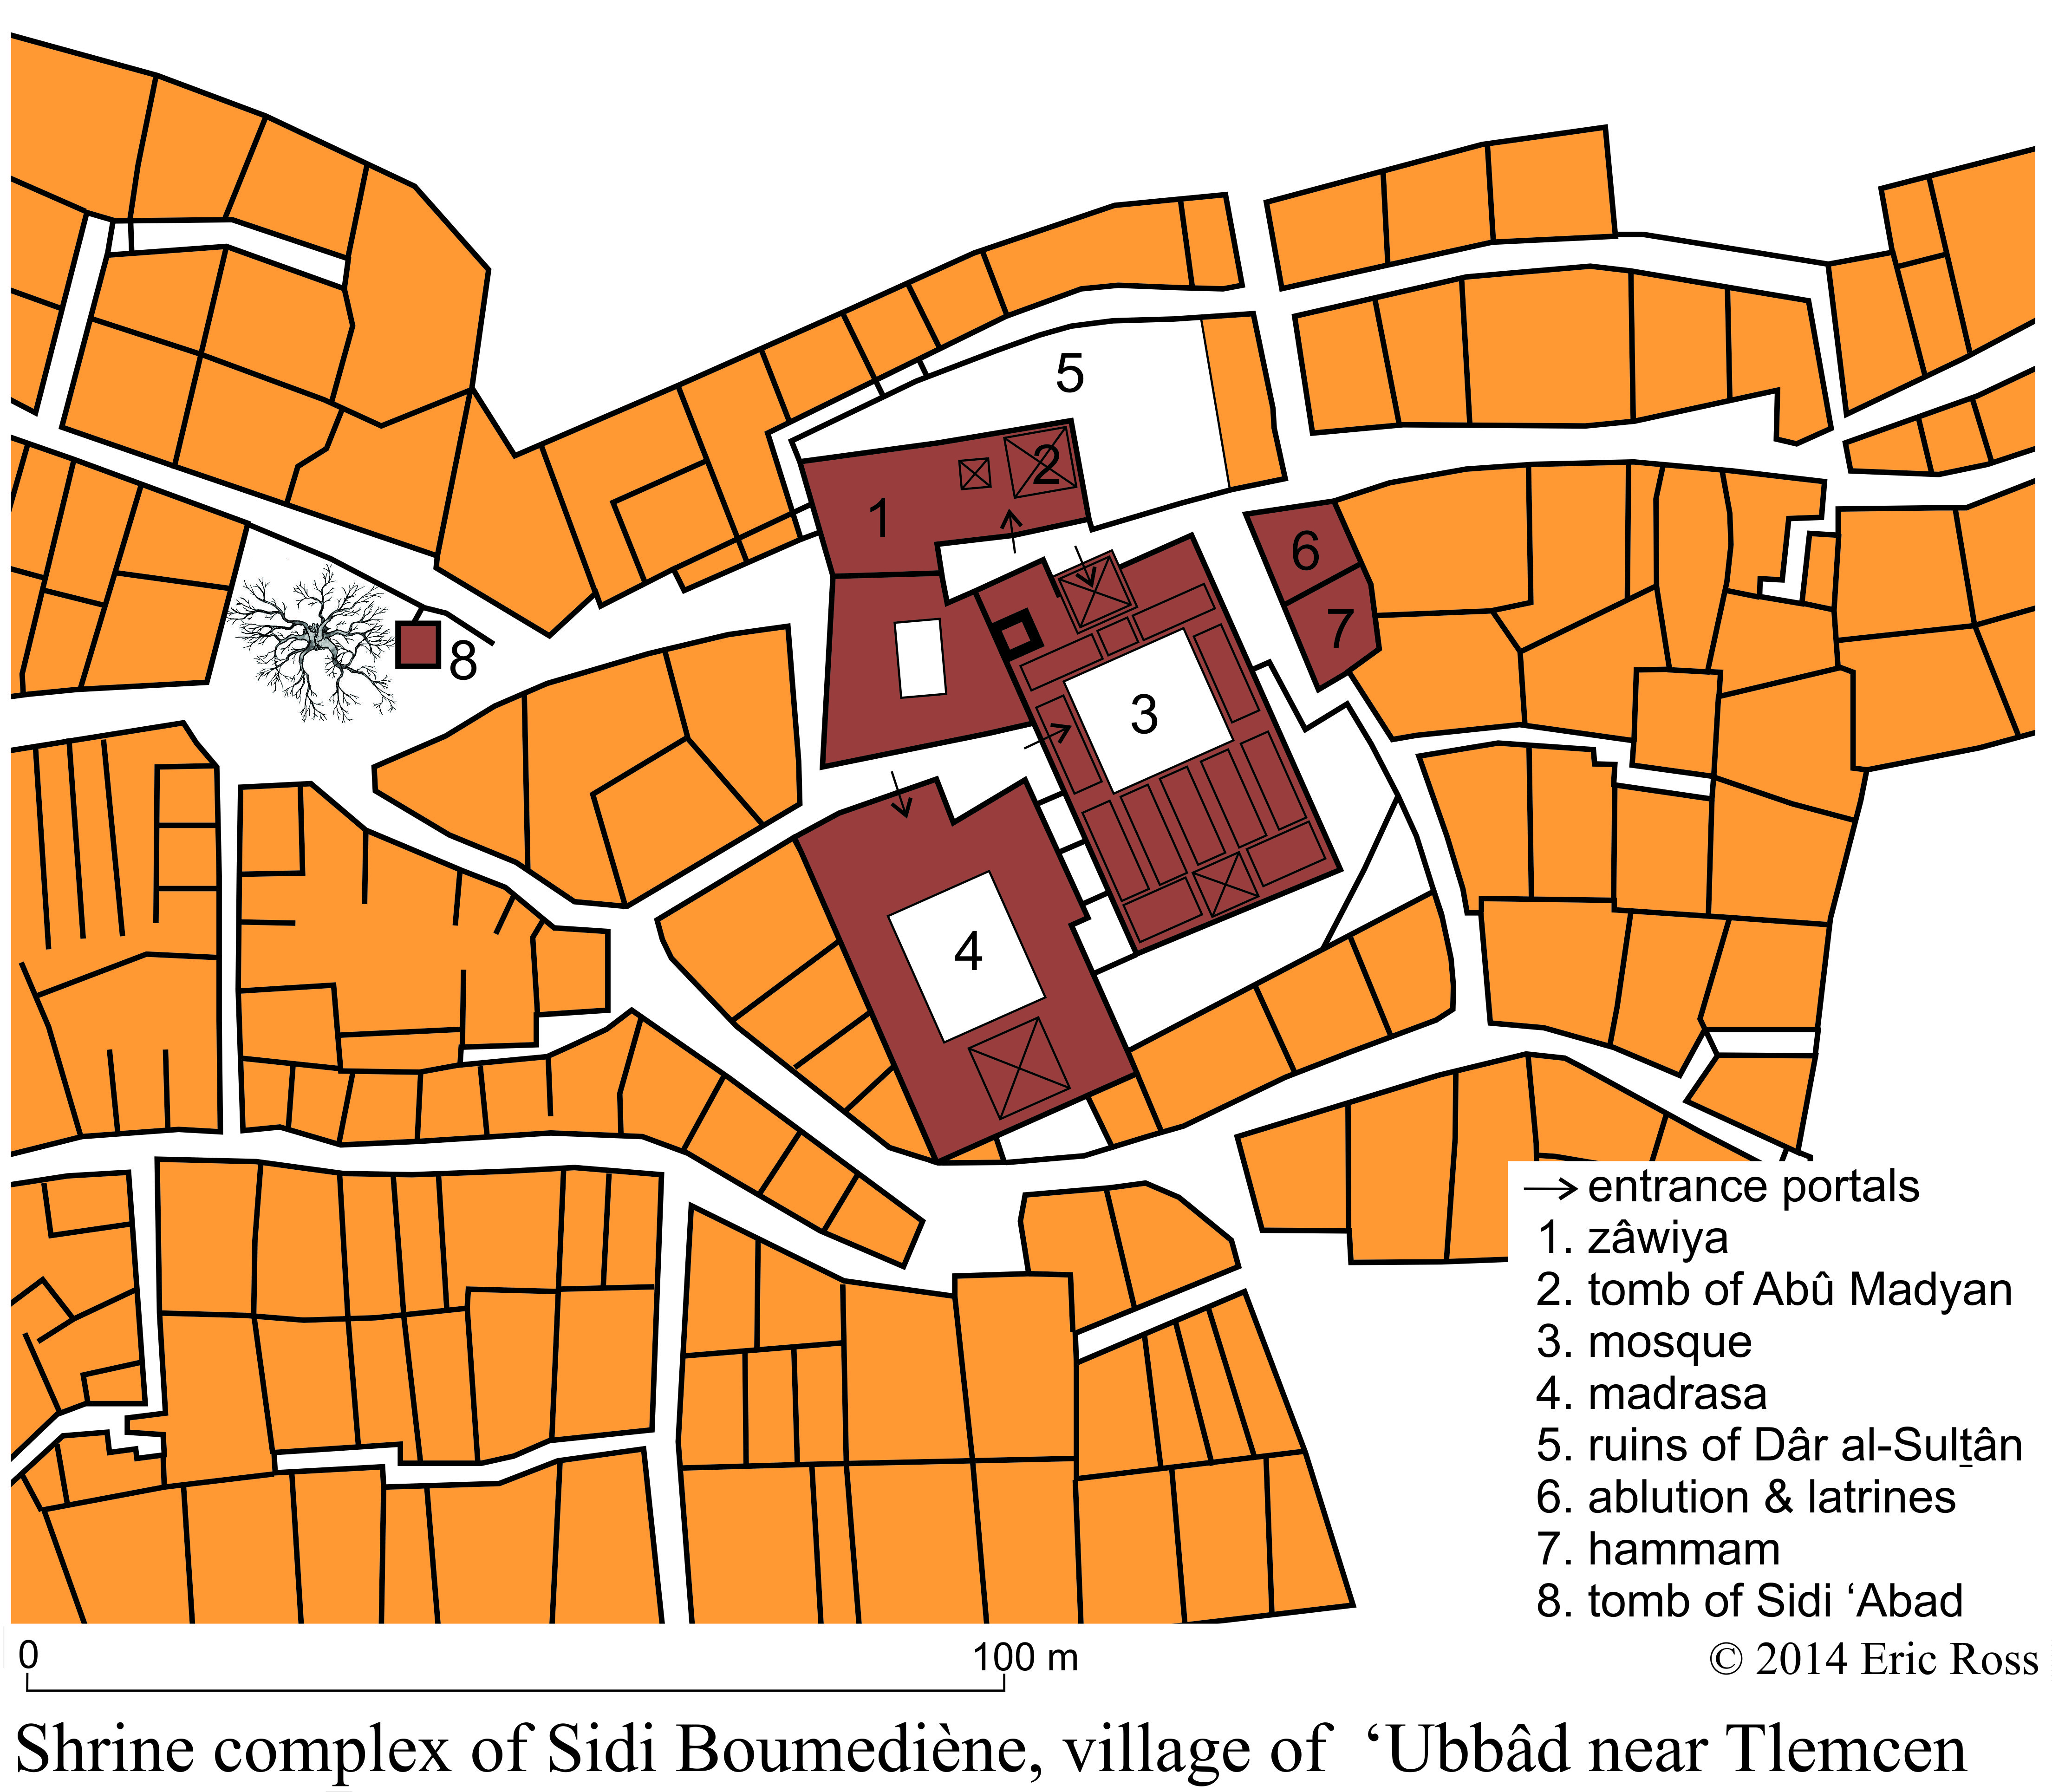 Plan of 'Ubbâd showing layout of the Sidi Boumediène complex